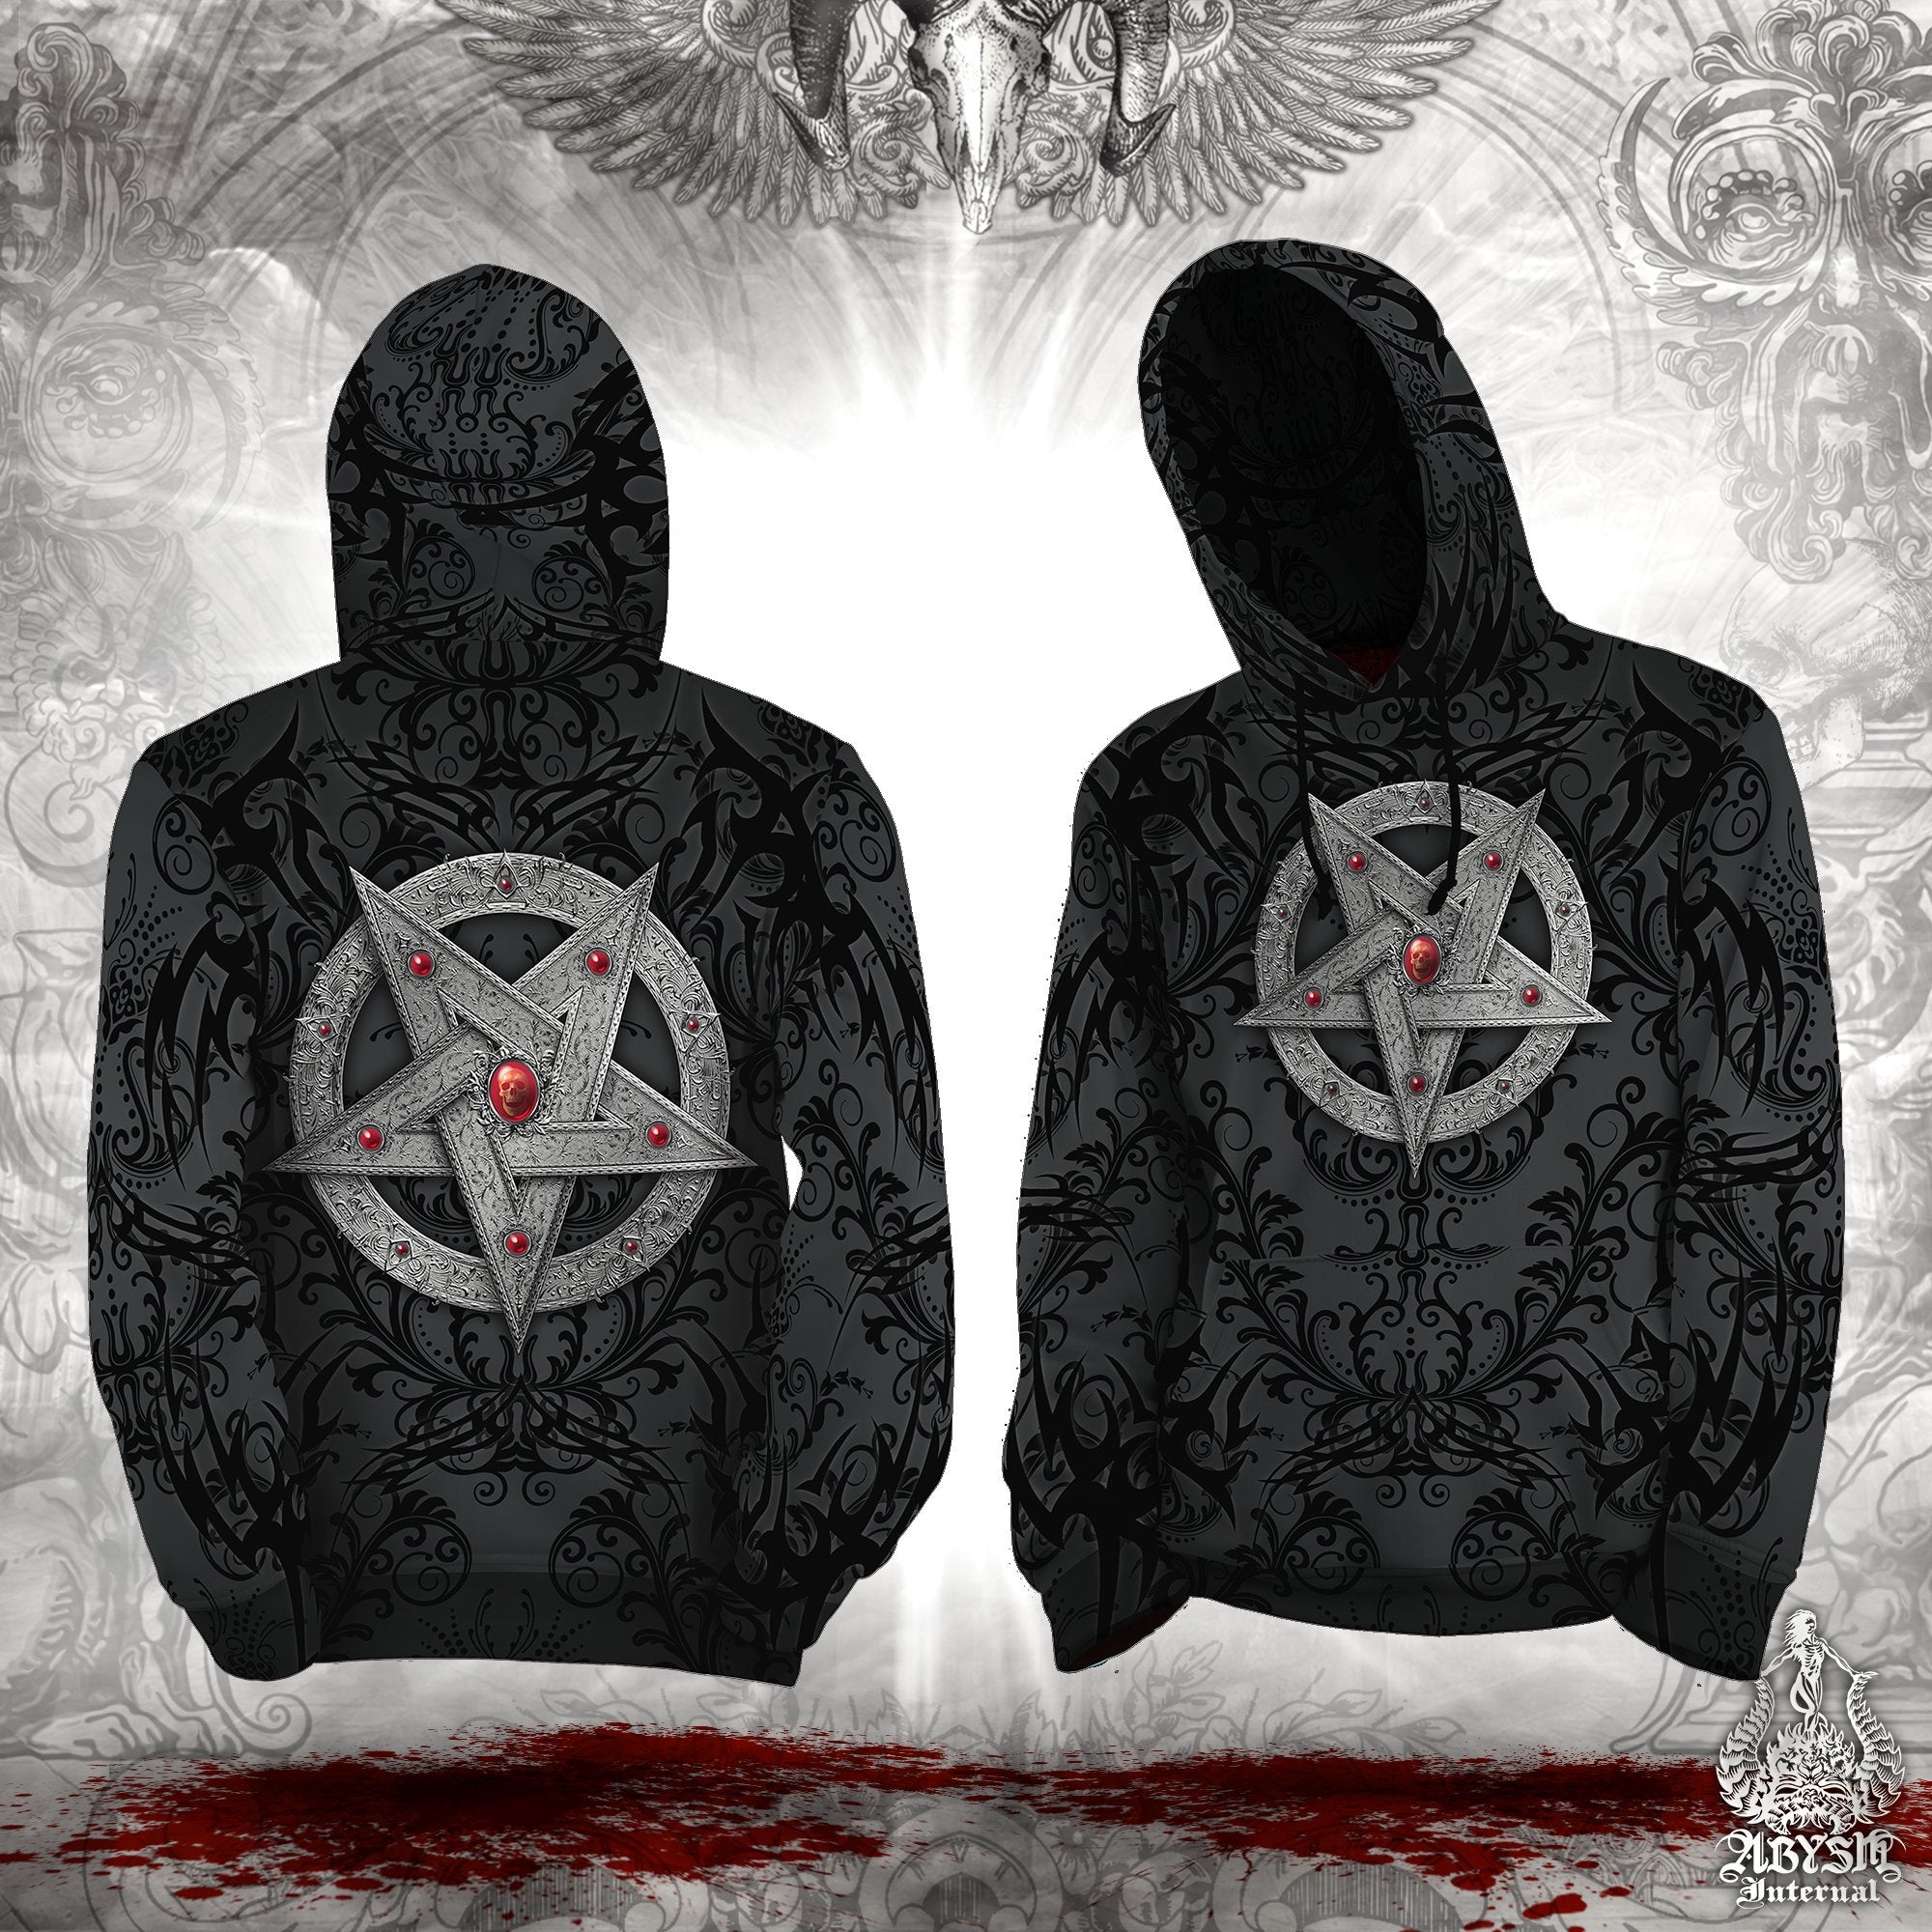 Silver Pentagram Sweater, Black Metal Streetwear, Gothic Hoodie, Satanic Goth, Alternative Clothing, Unisex - Red or Black, 2 Colors - Abysm Internal